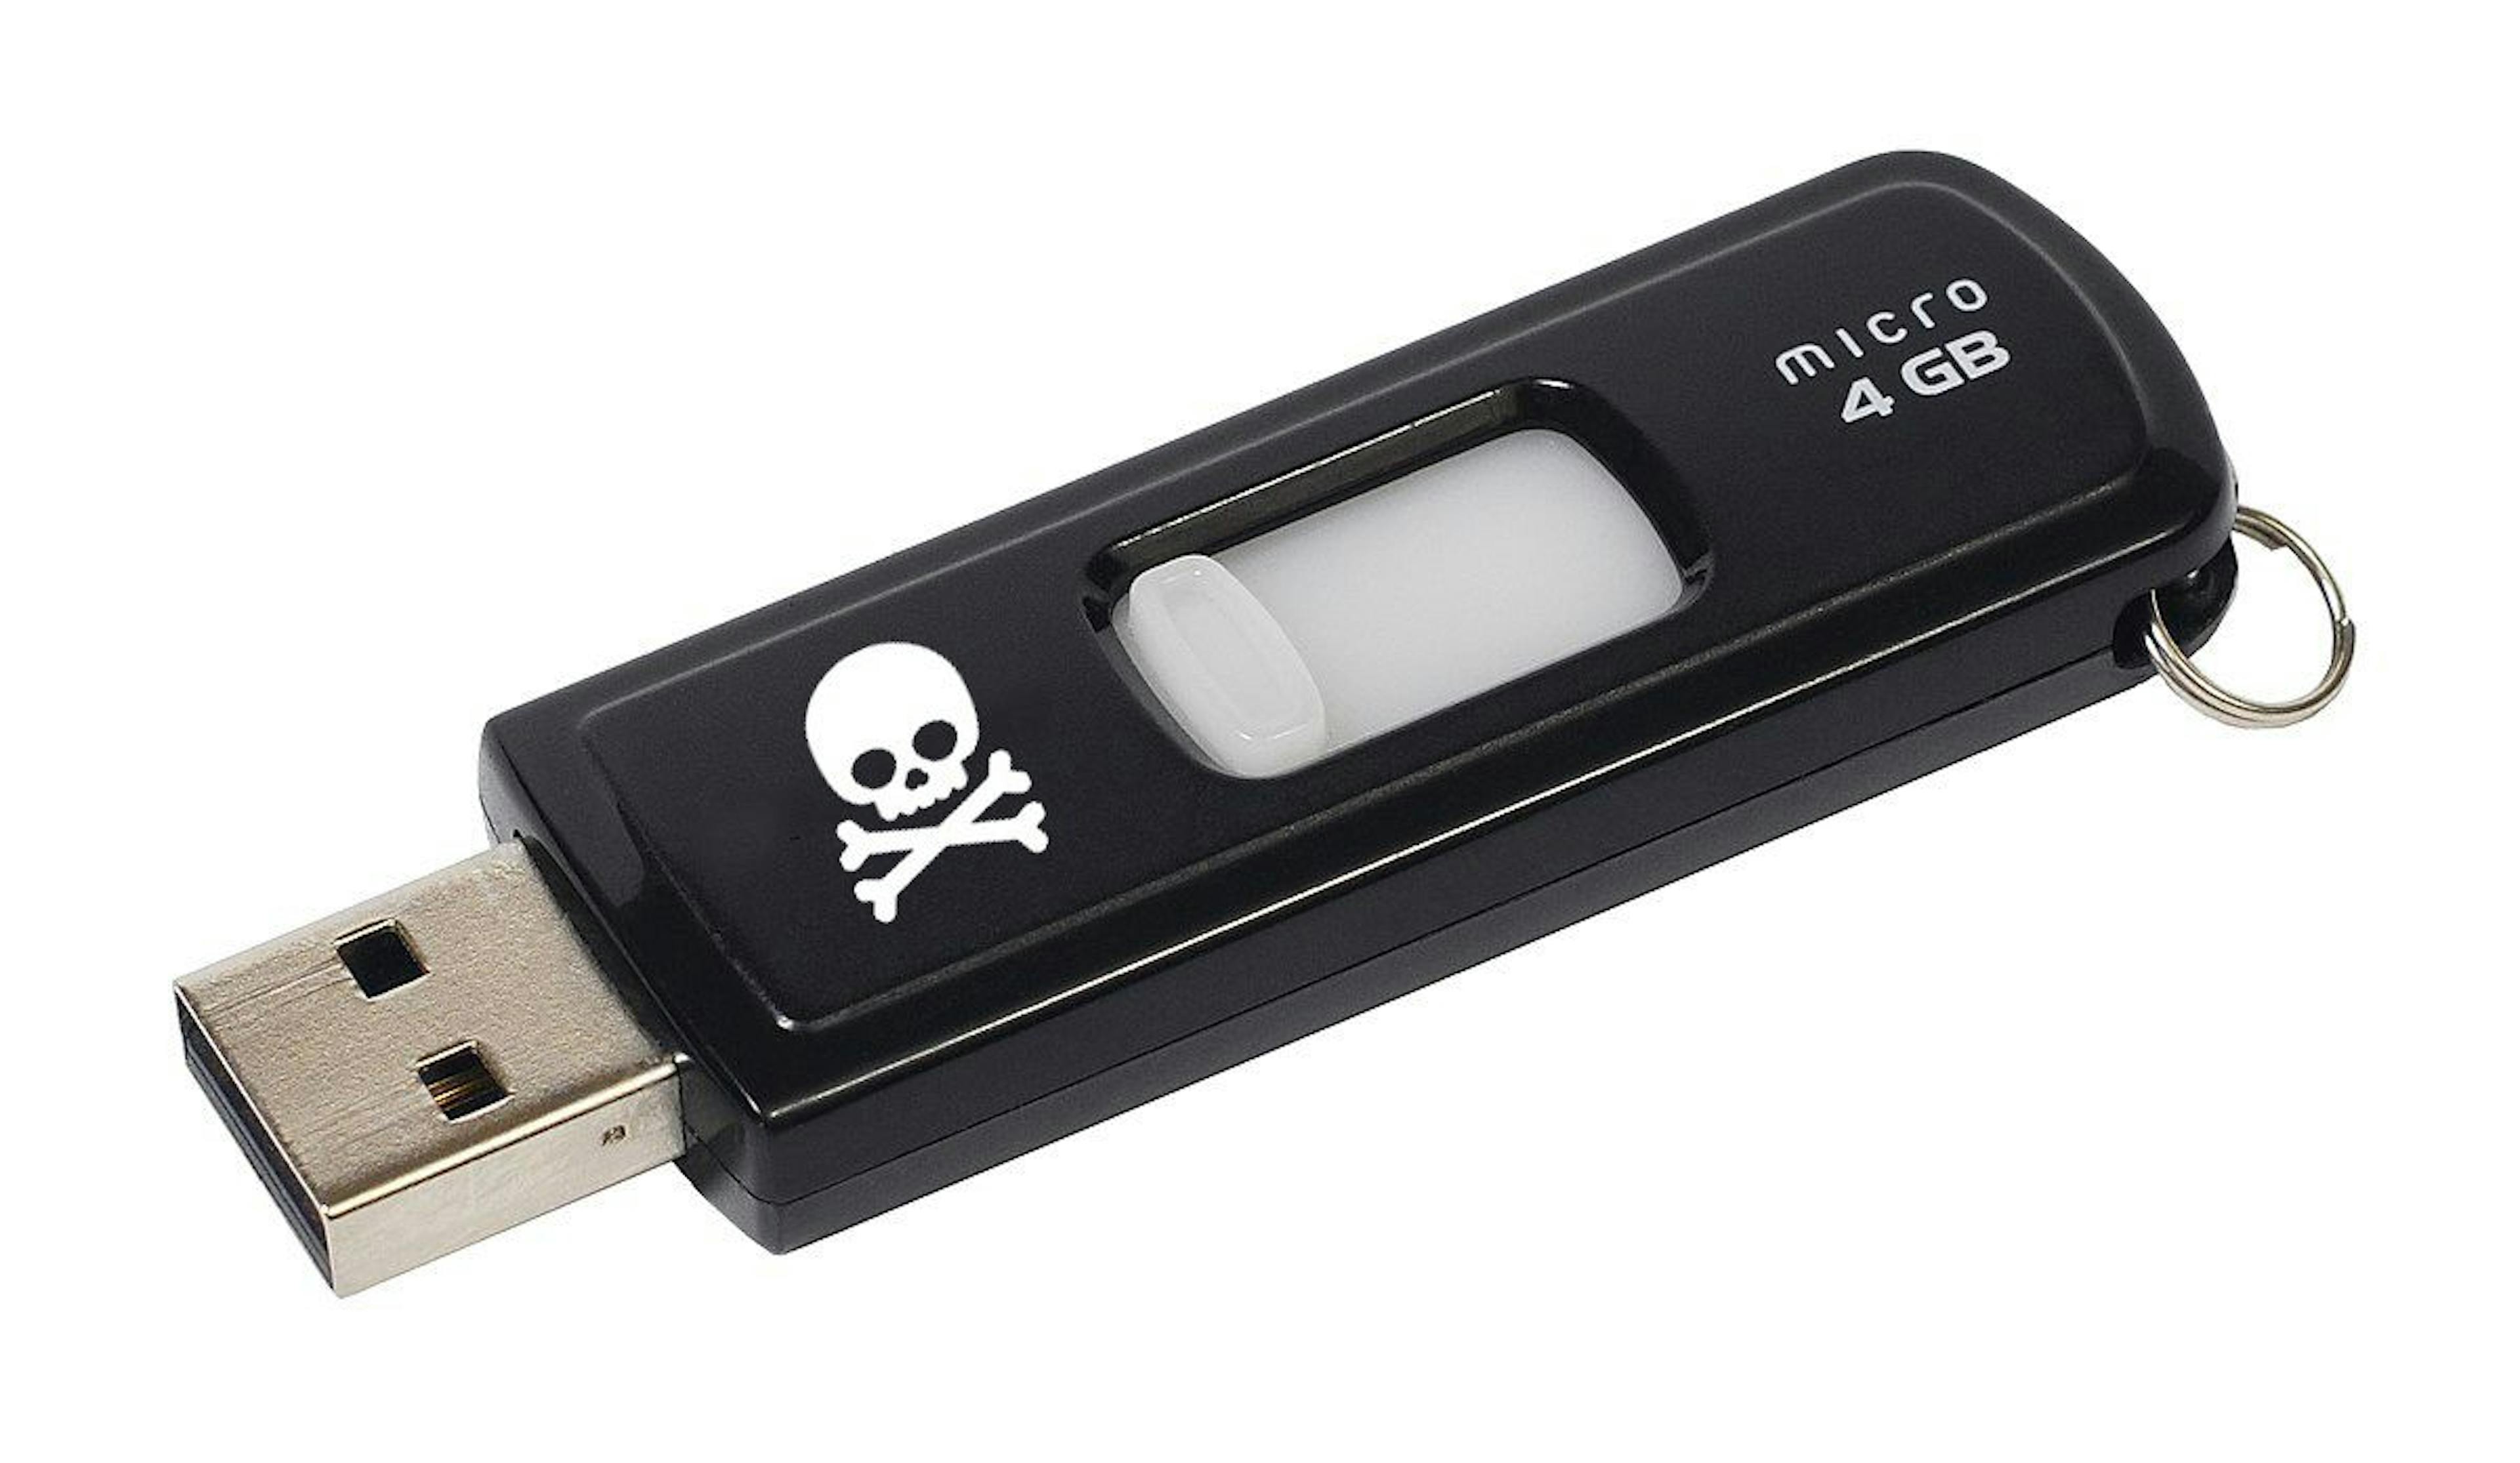 featured image - 悪意のある USB デバイスを作成して無害に楽しむ方法